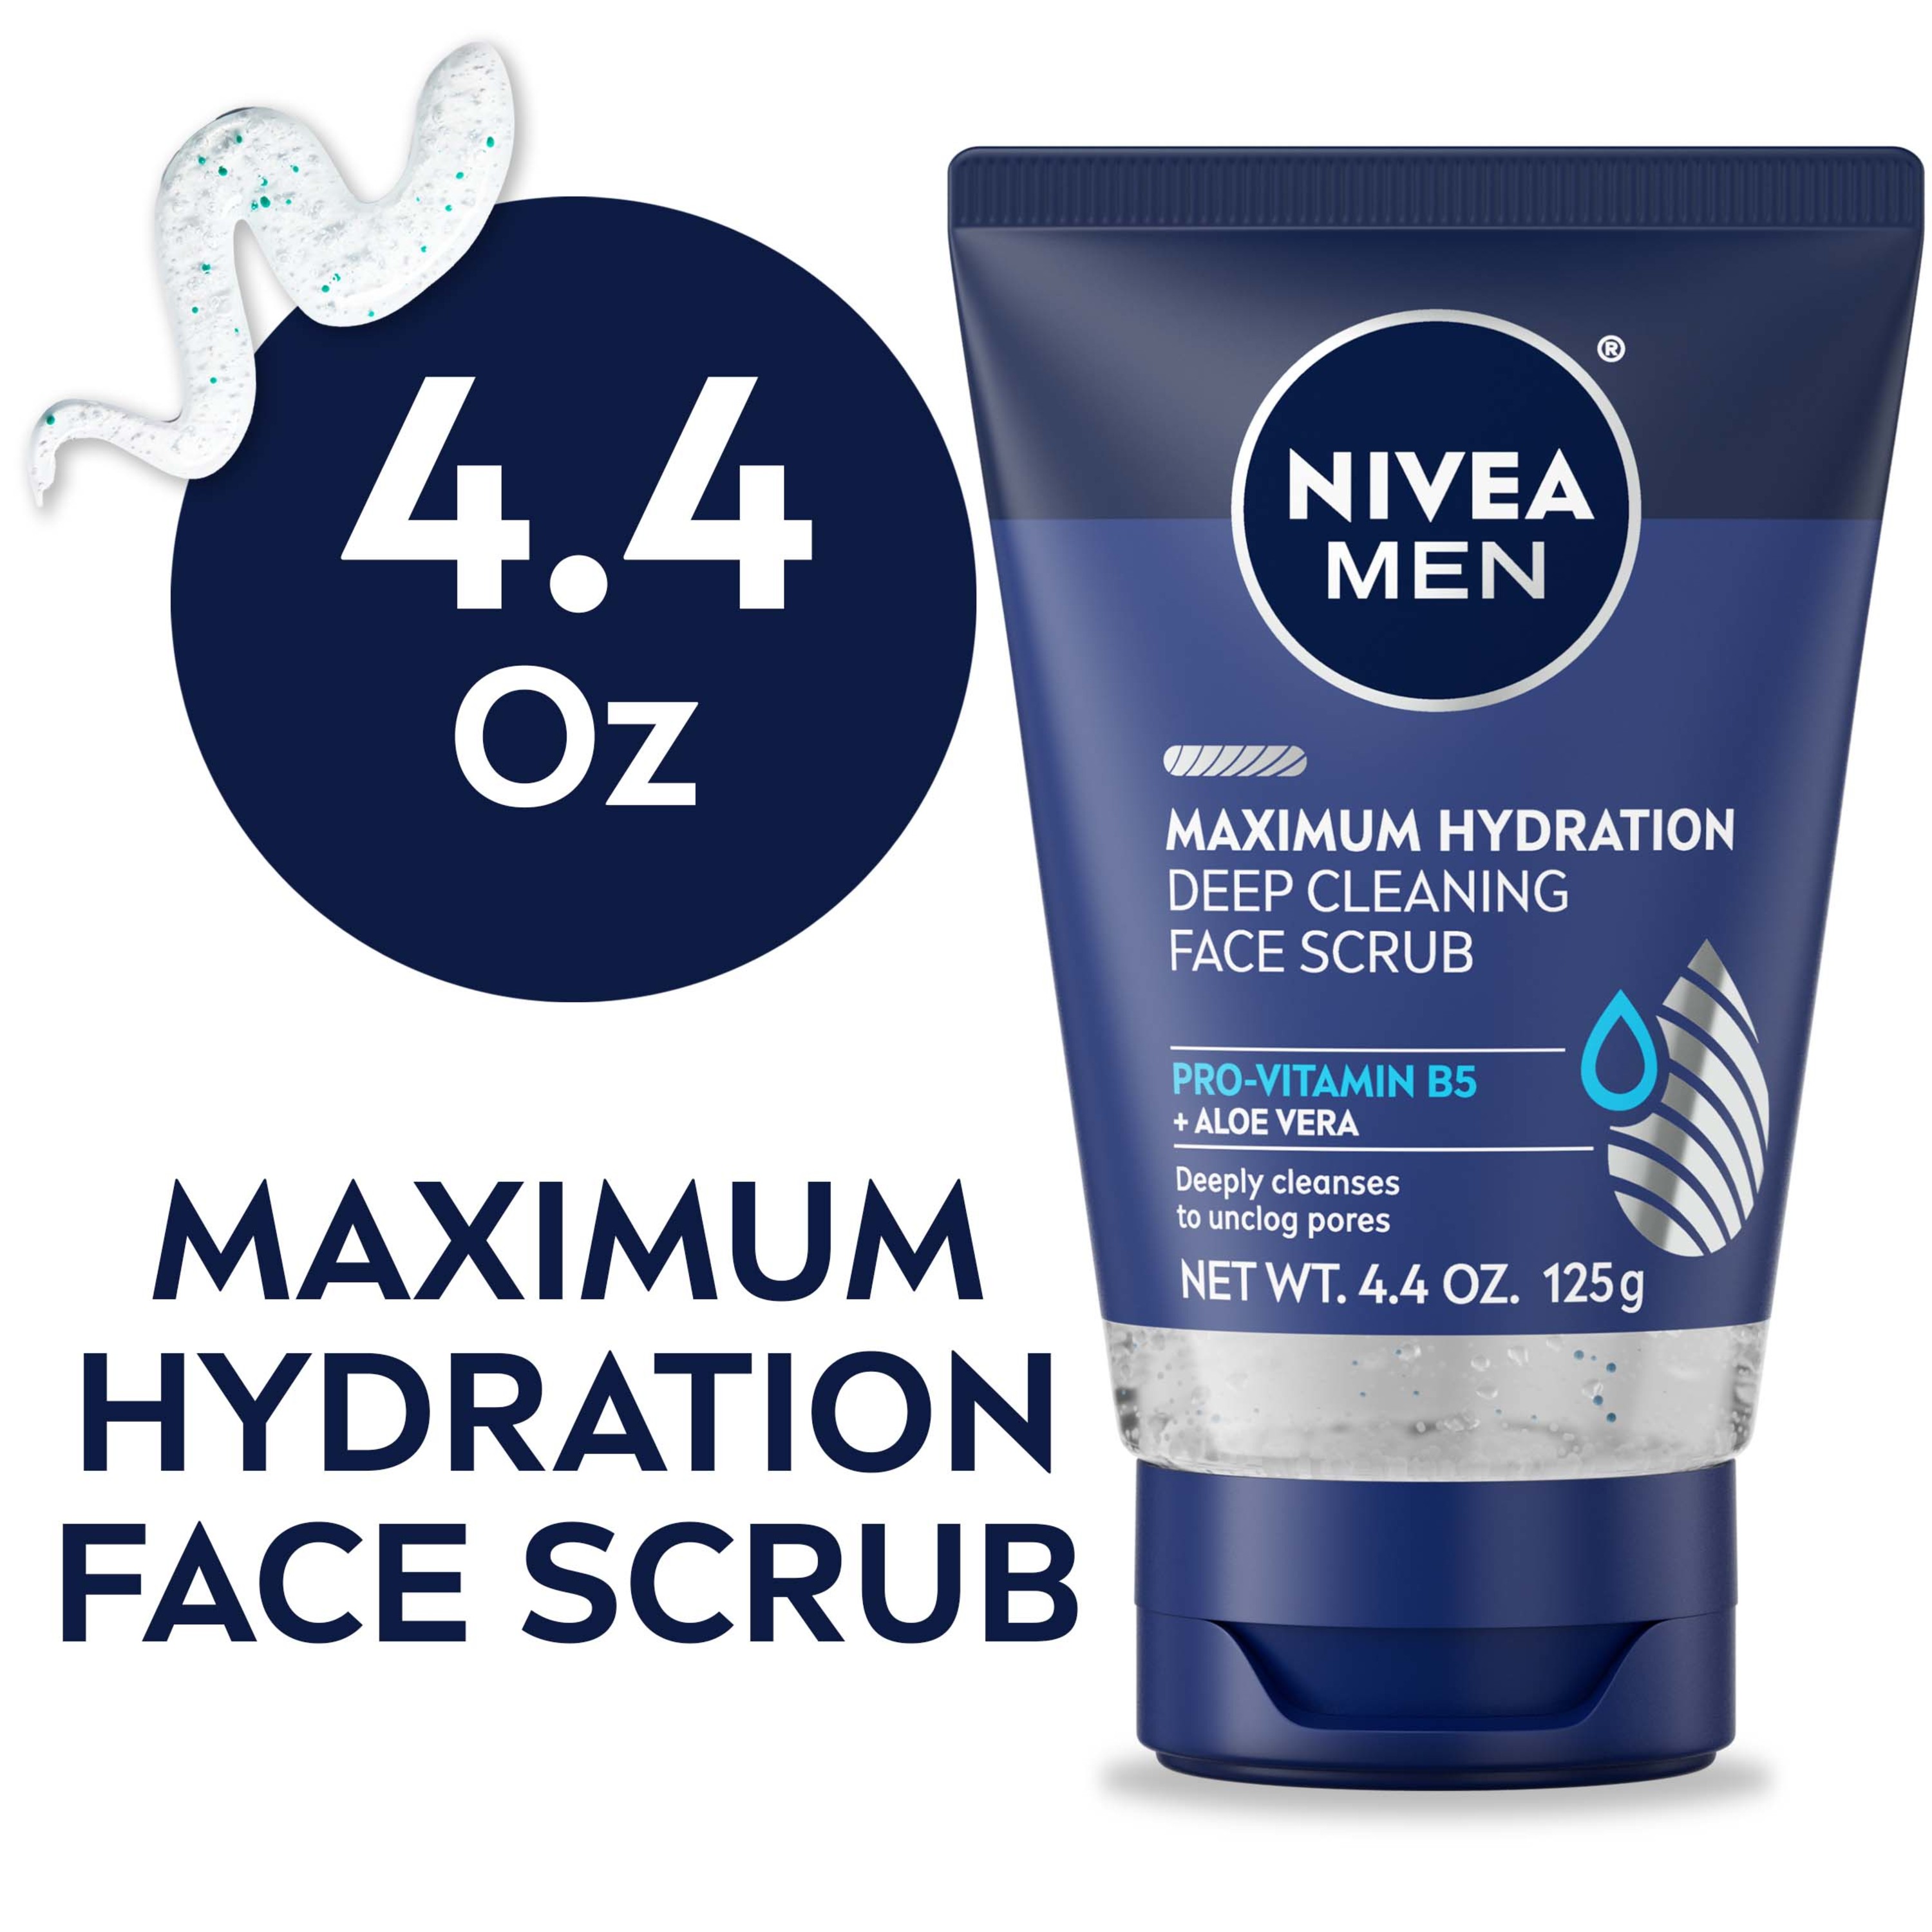 NIVEA MEN Maximum Hydration Deep Cleaning Face Scrub with Aloe Vera, 4.4 Oz Tube - image 1 of 13